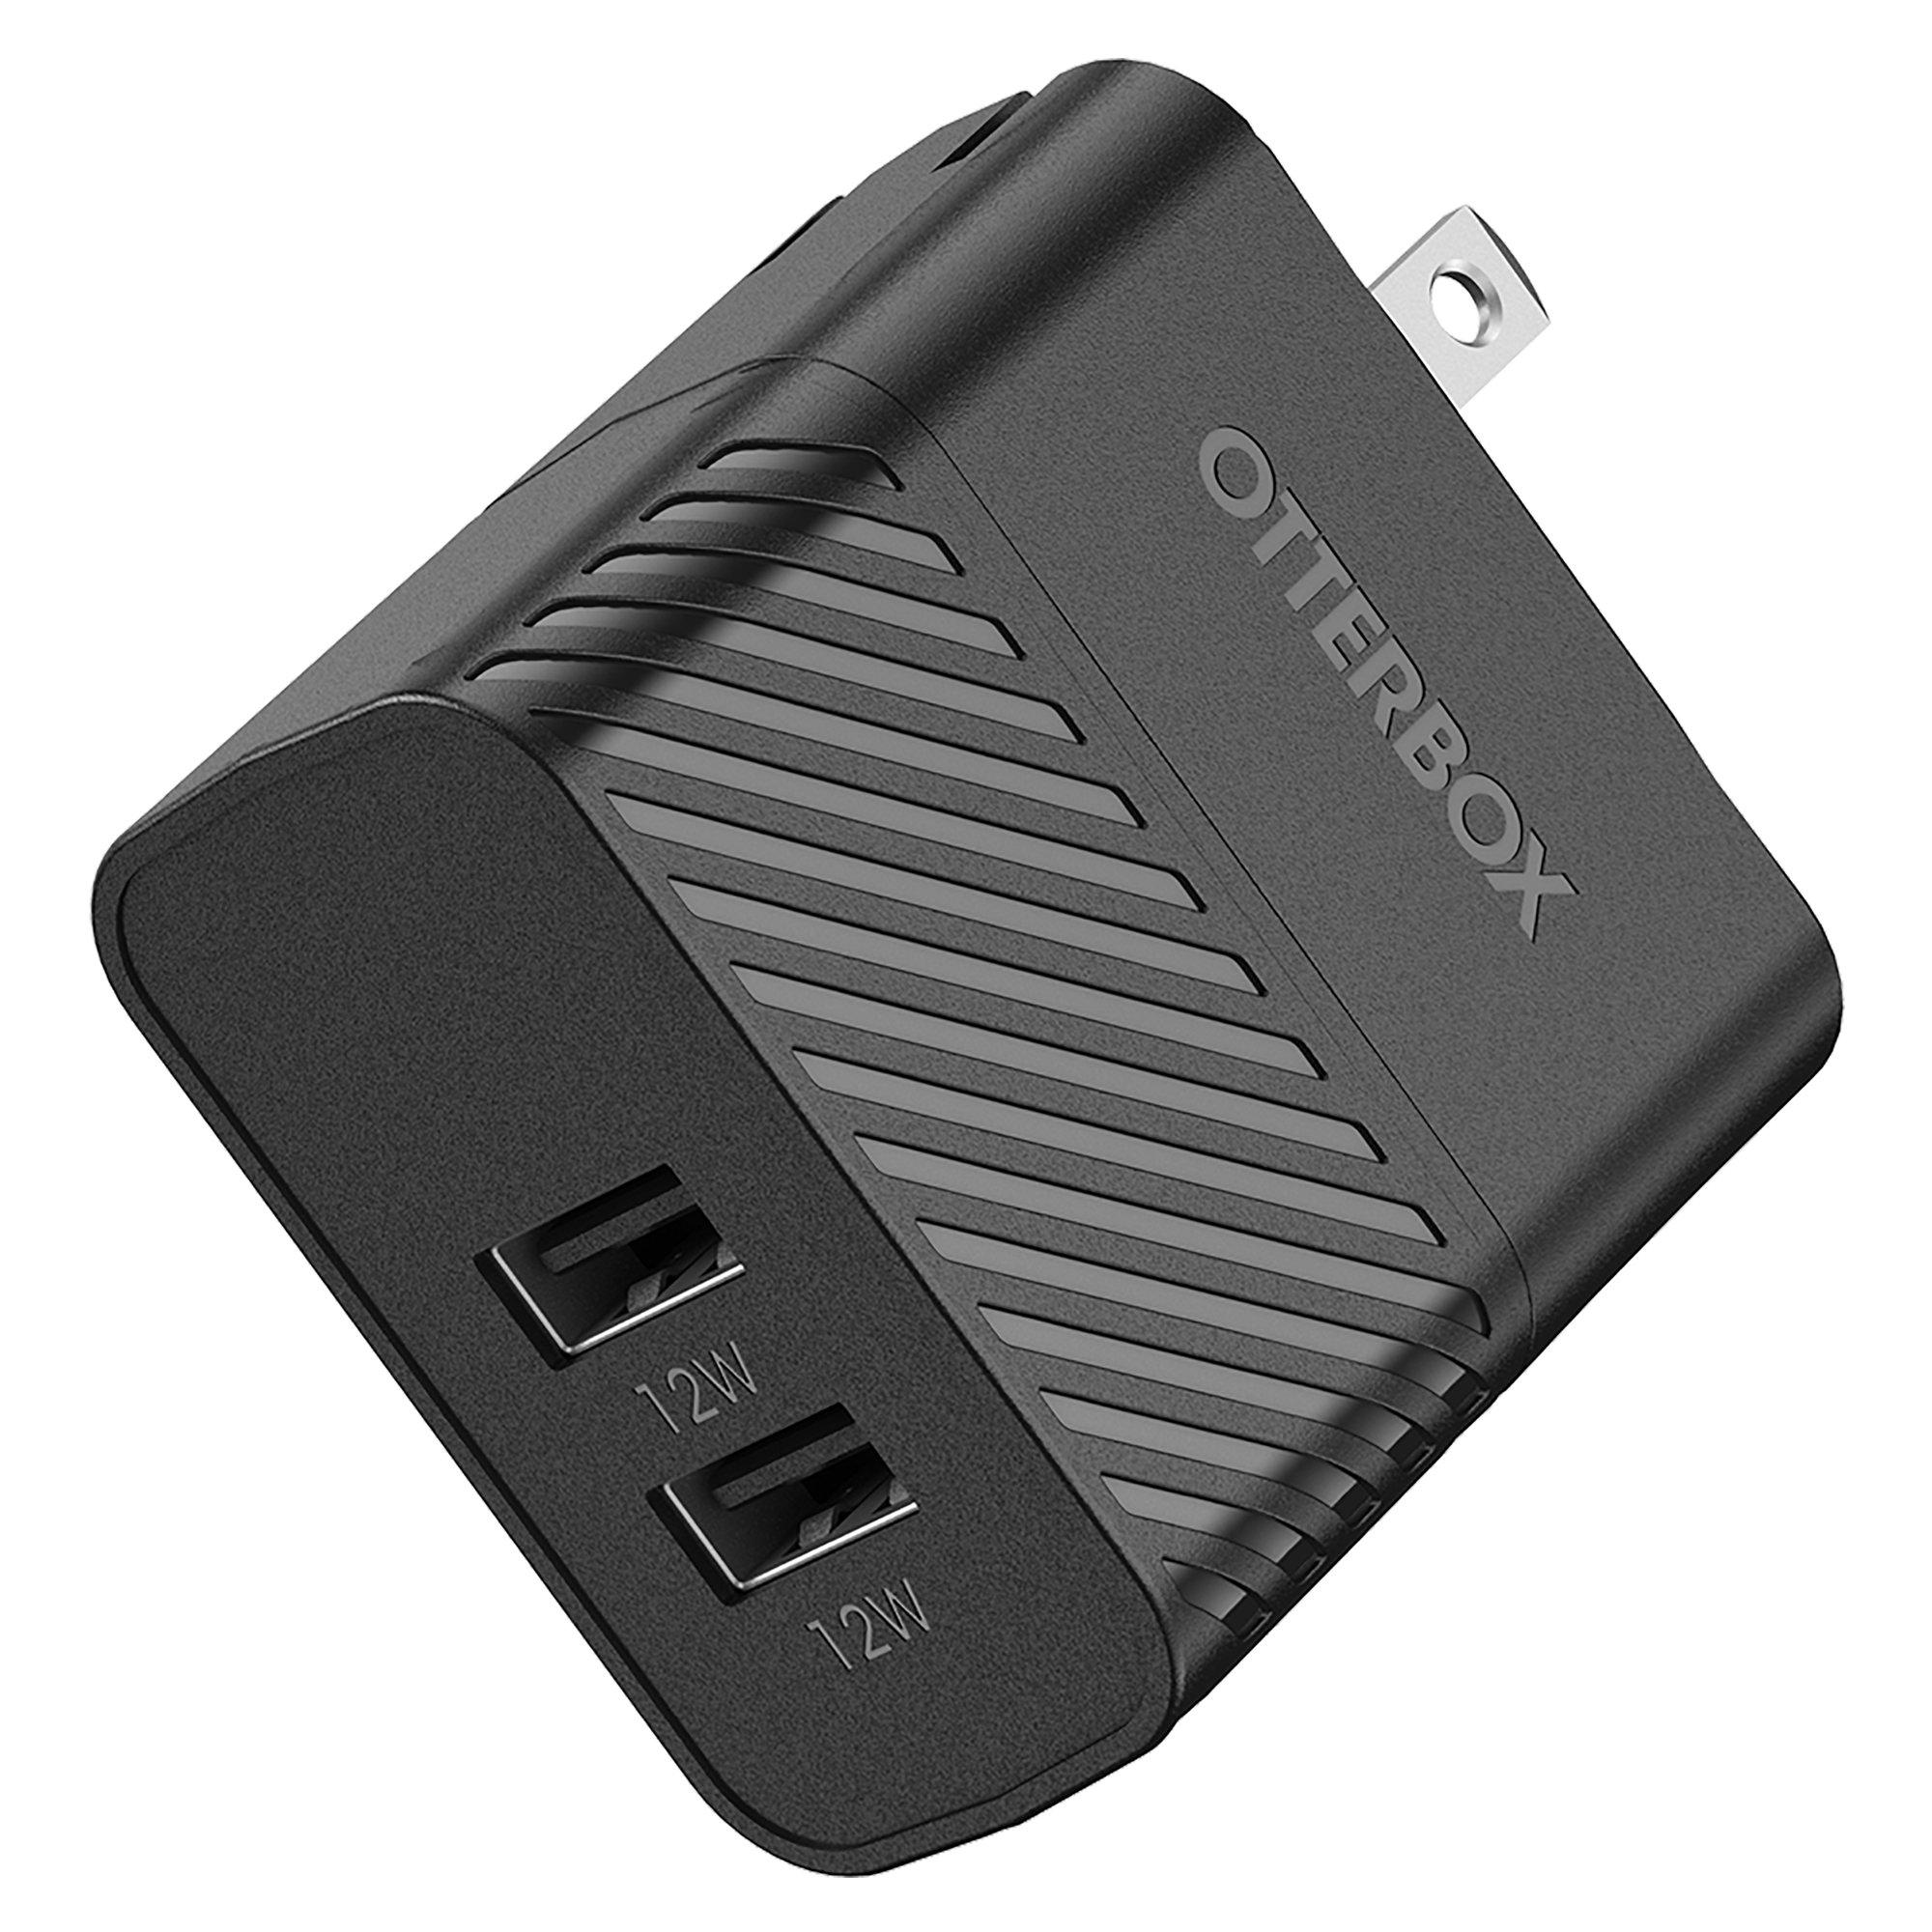 tegenkomen Verloren Motivatie Otterbox Premium Dual USB-A Port 24W Wall Charger | GameStop